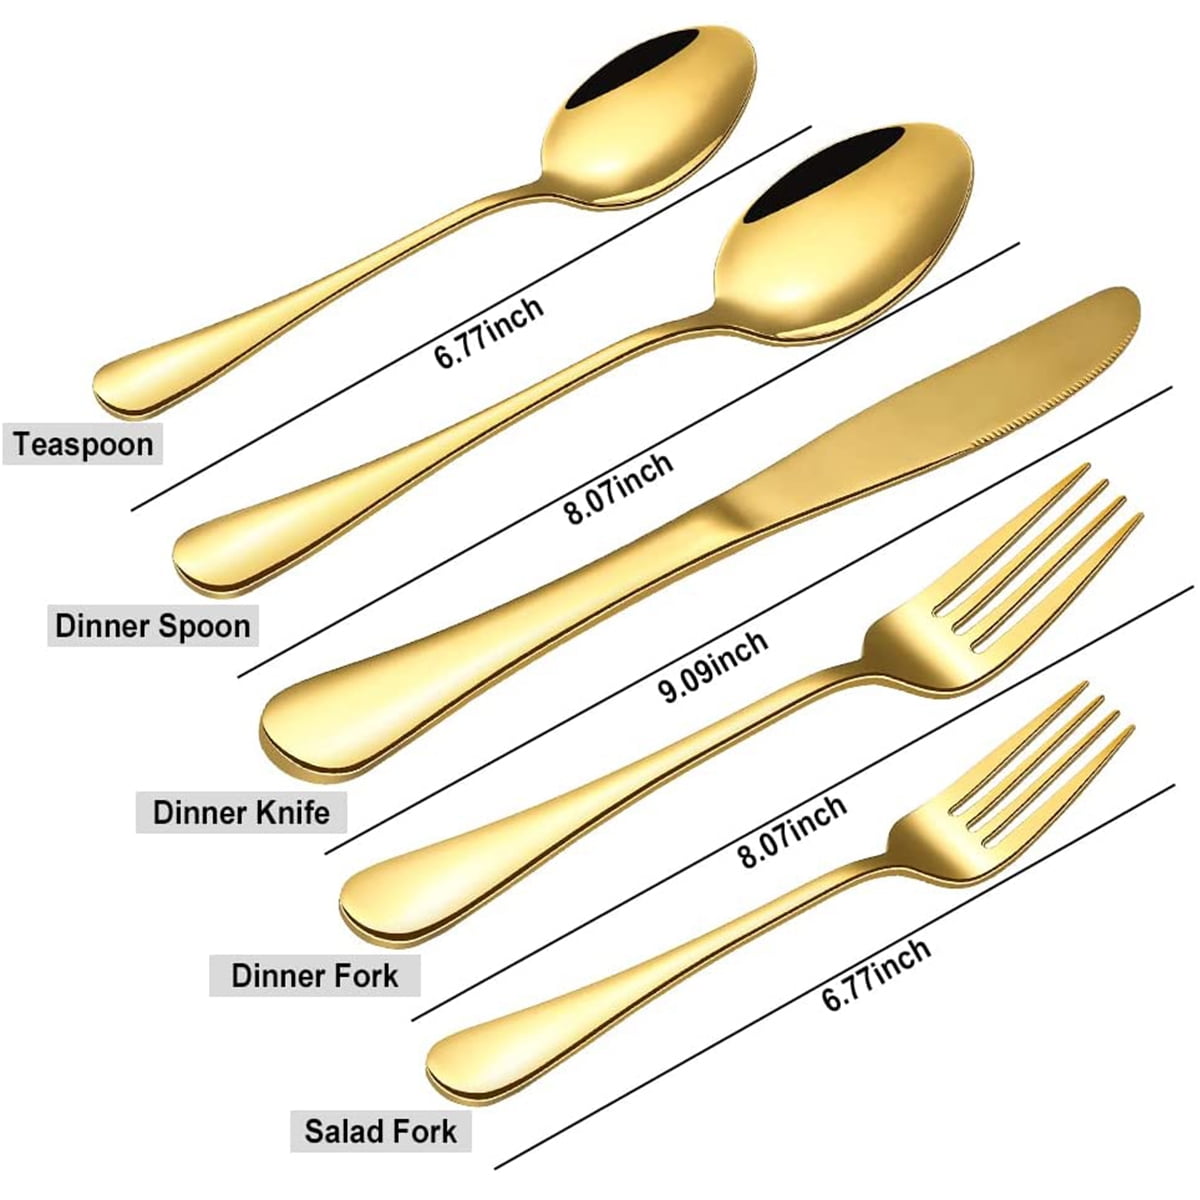 30 Pieces Silverware Set, KINGSTONE Flatware Cutlery Set for 6, 18/10  Stainless Steel Silverware Utensils Minimalist Design Dishwasher Safe